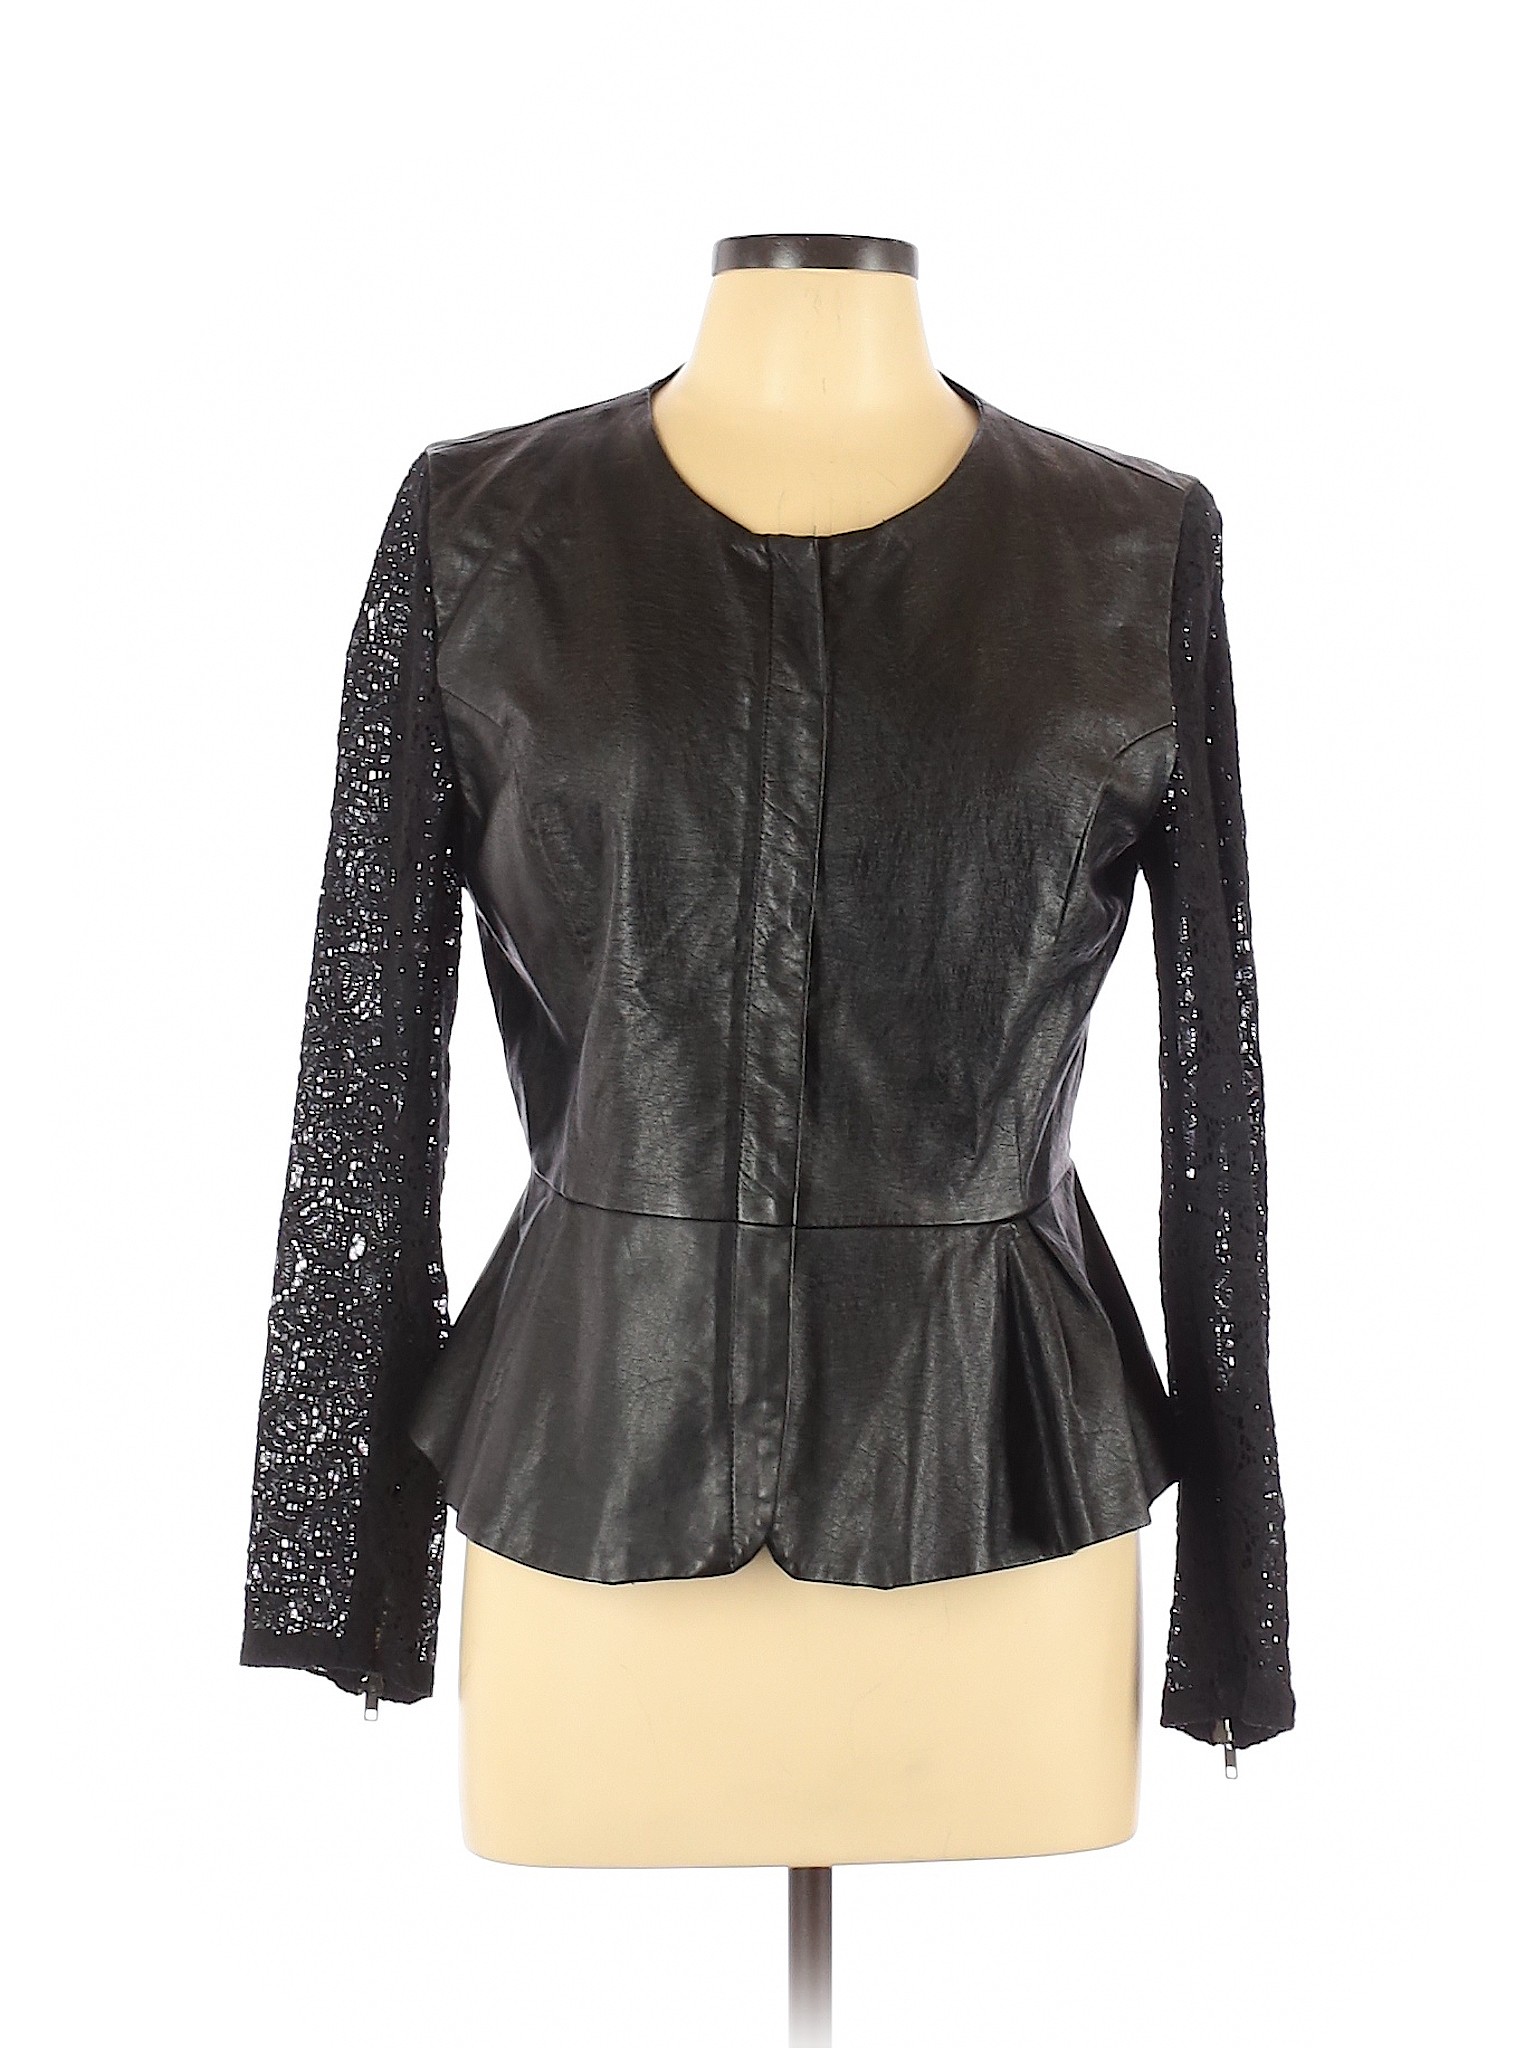 Romeo & Juliet Couture Women Black Faux Leather Jacket L | eBay